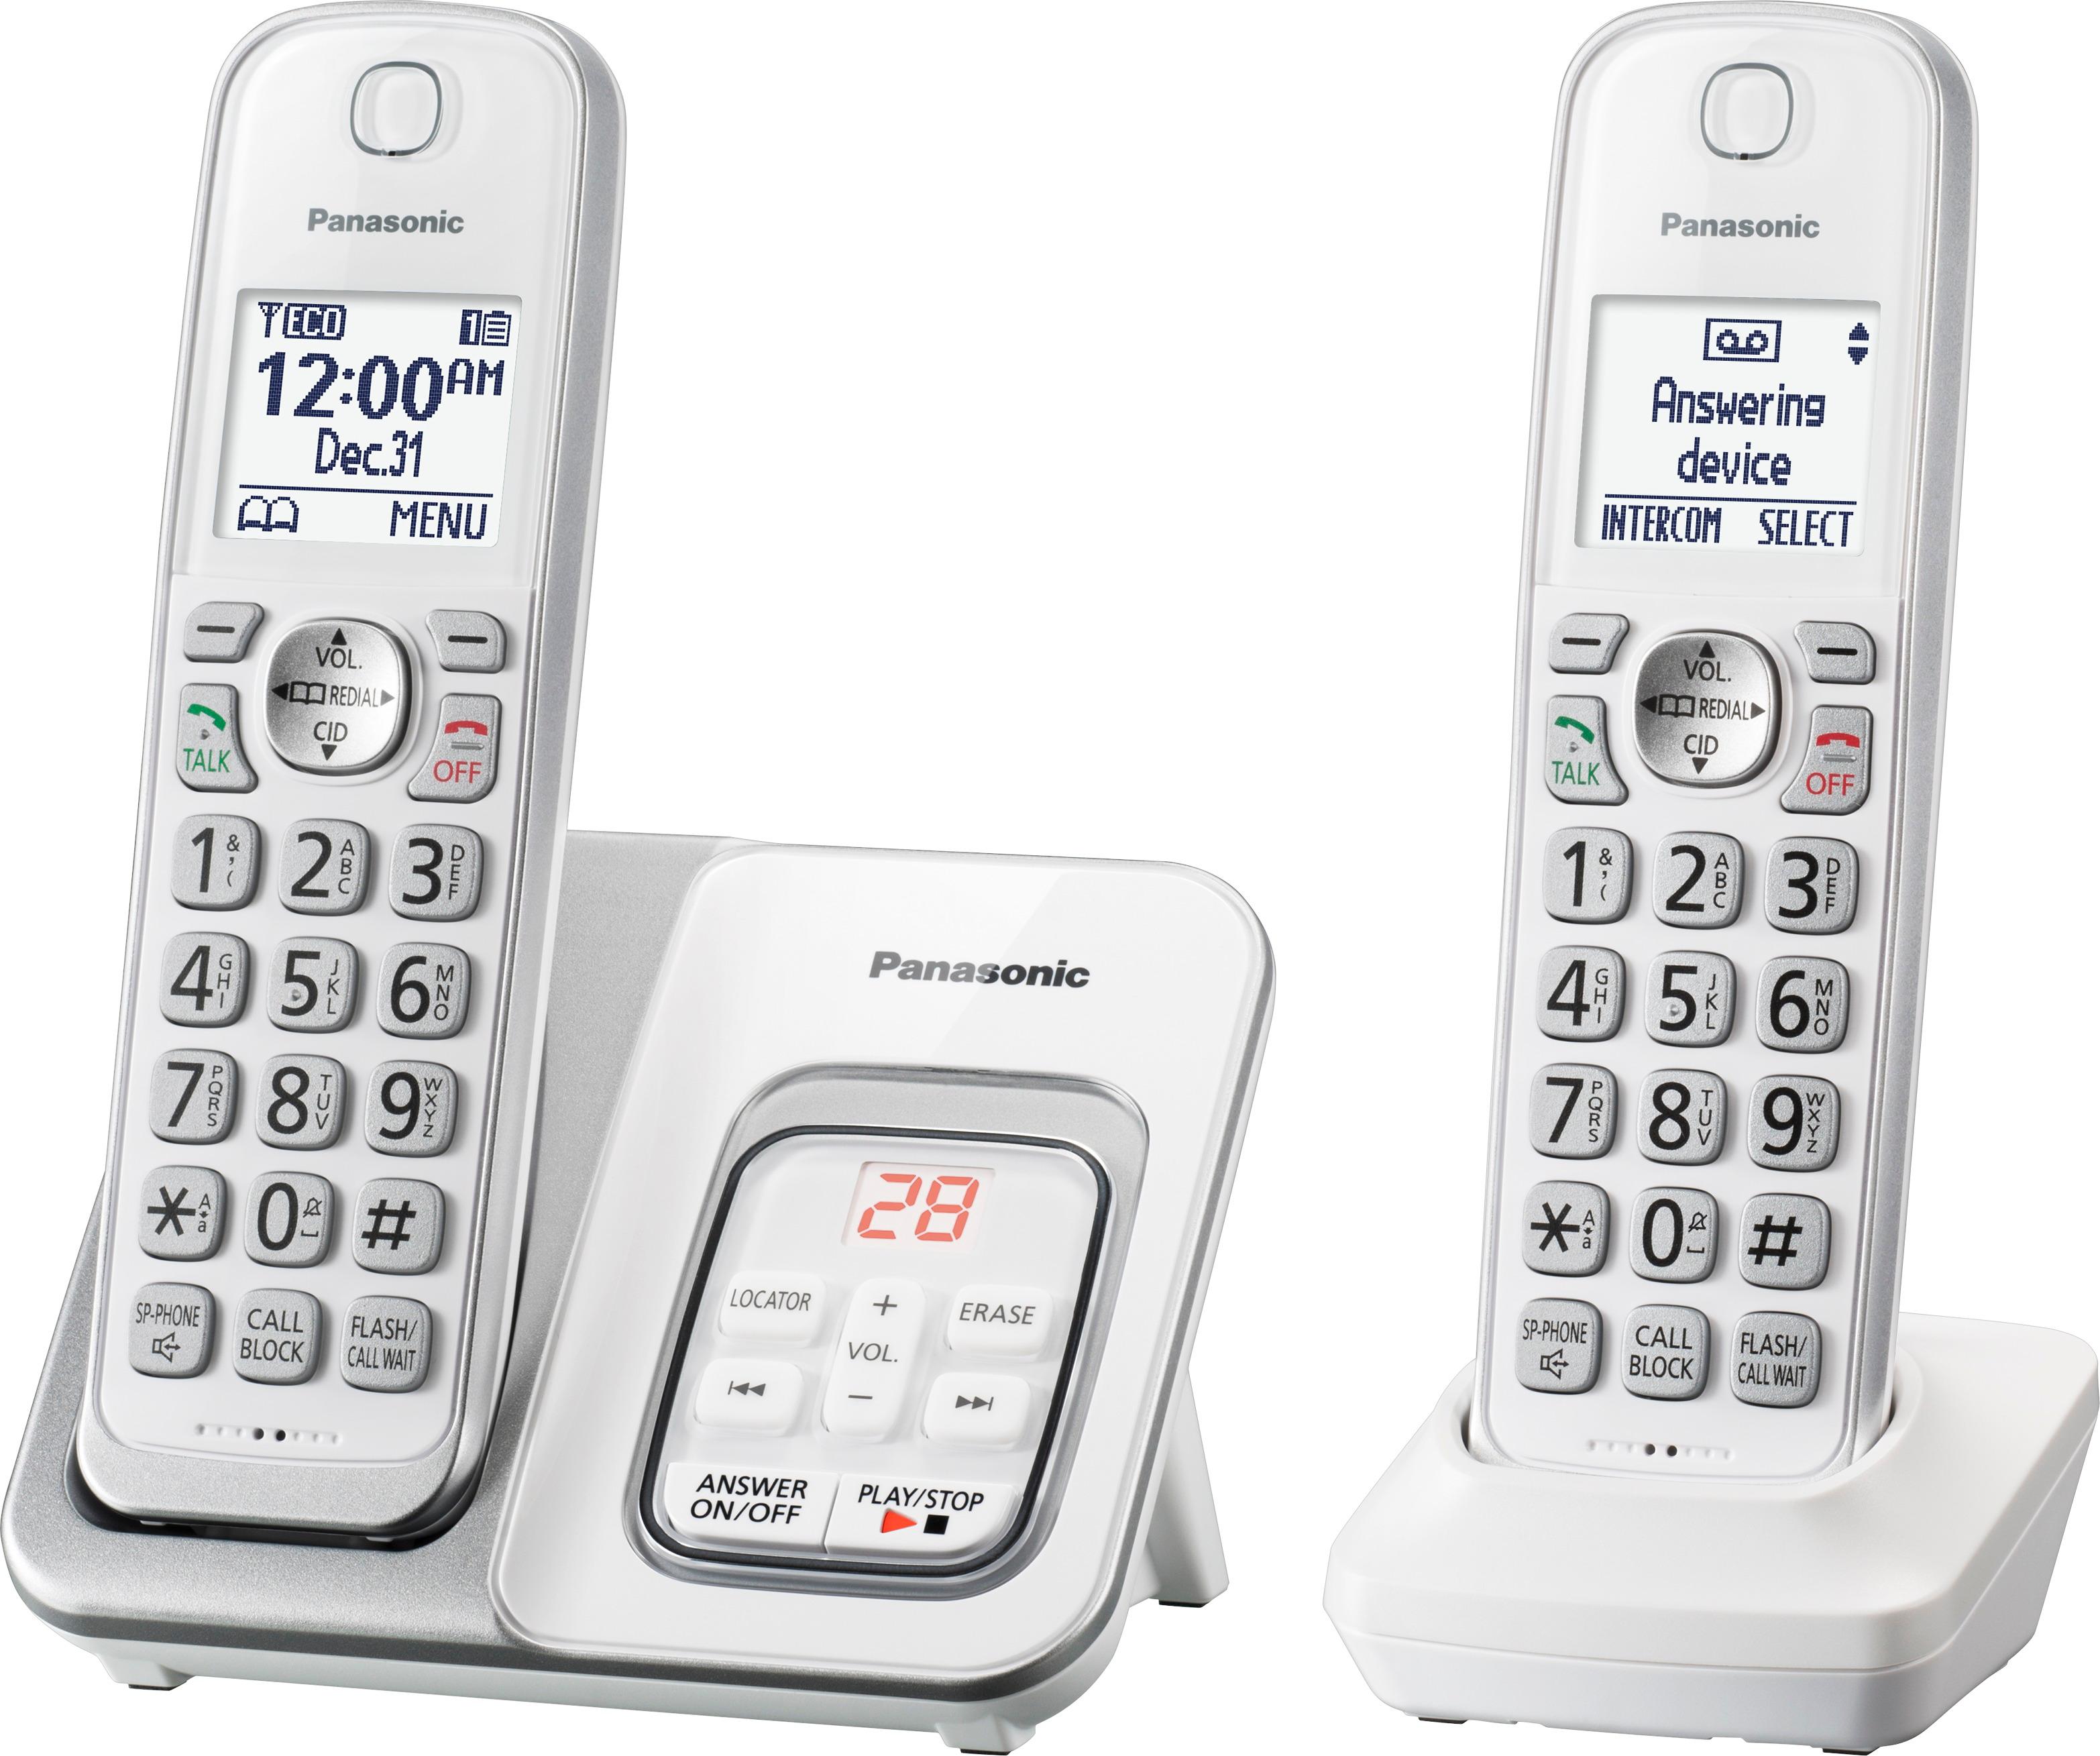 Left View: Panasonic KX-TGD532W DECT 6.0 1.93 GHz Cordless Phone - White 1 x Phone Line - 2 x Handset - Speakerphone - Answering Machine